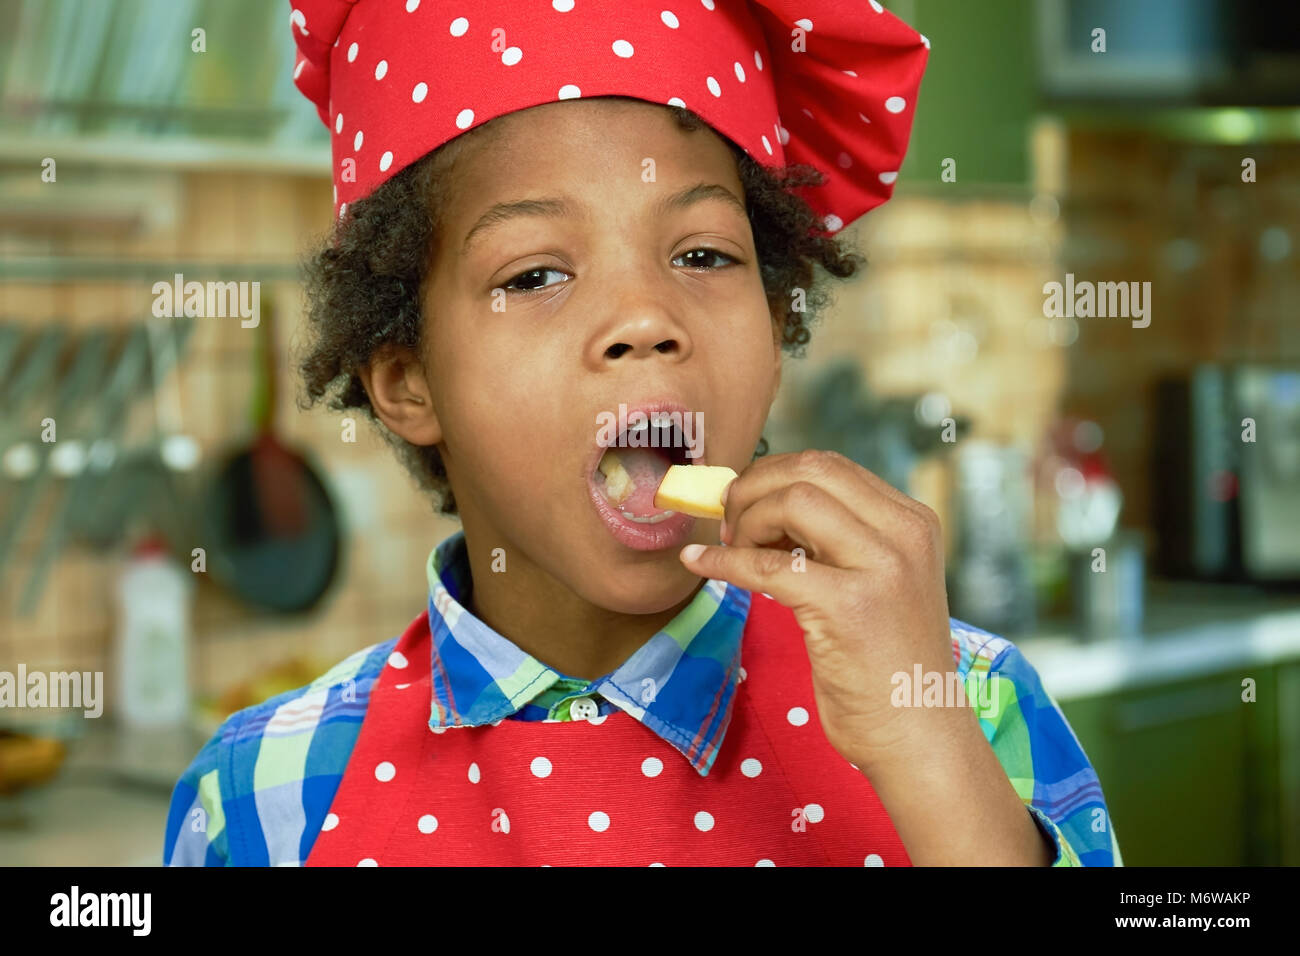 Afroamerican kid eating apple. Stock Photo